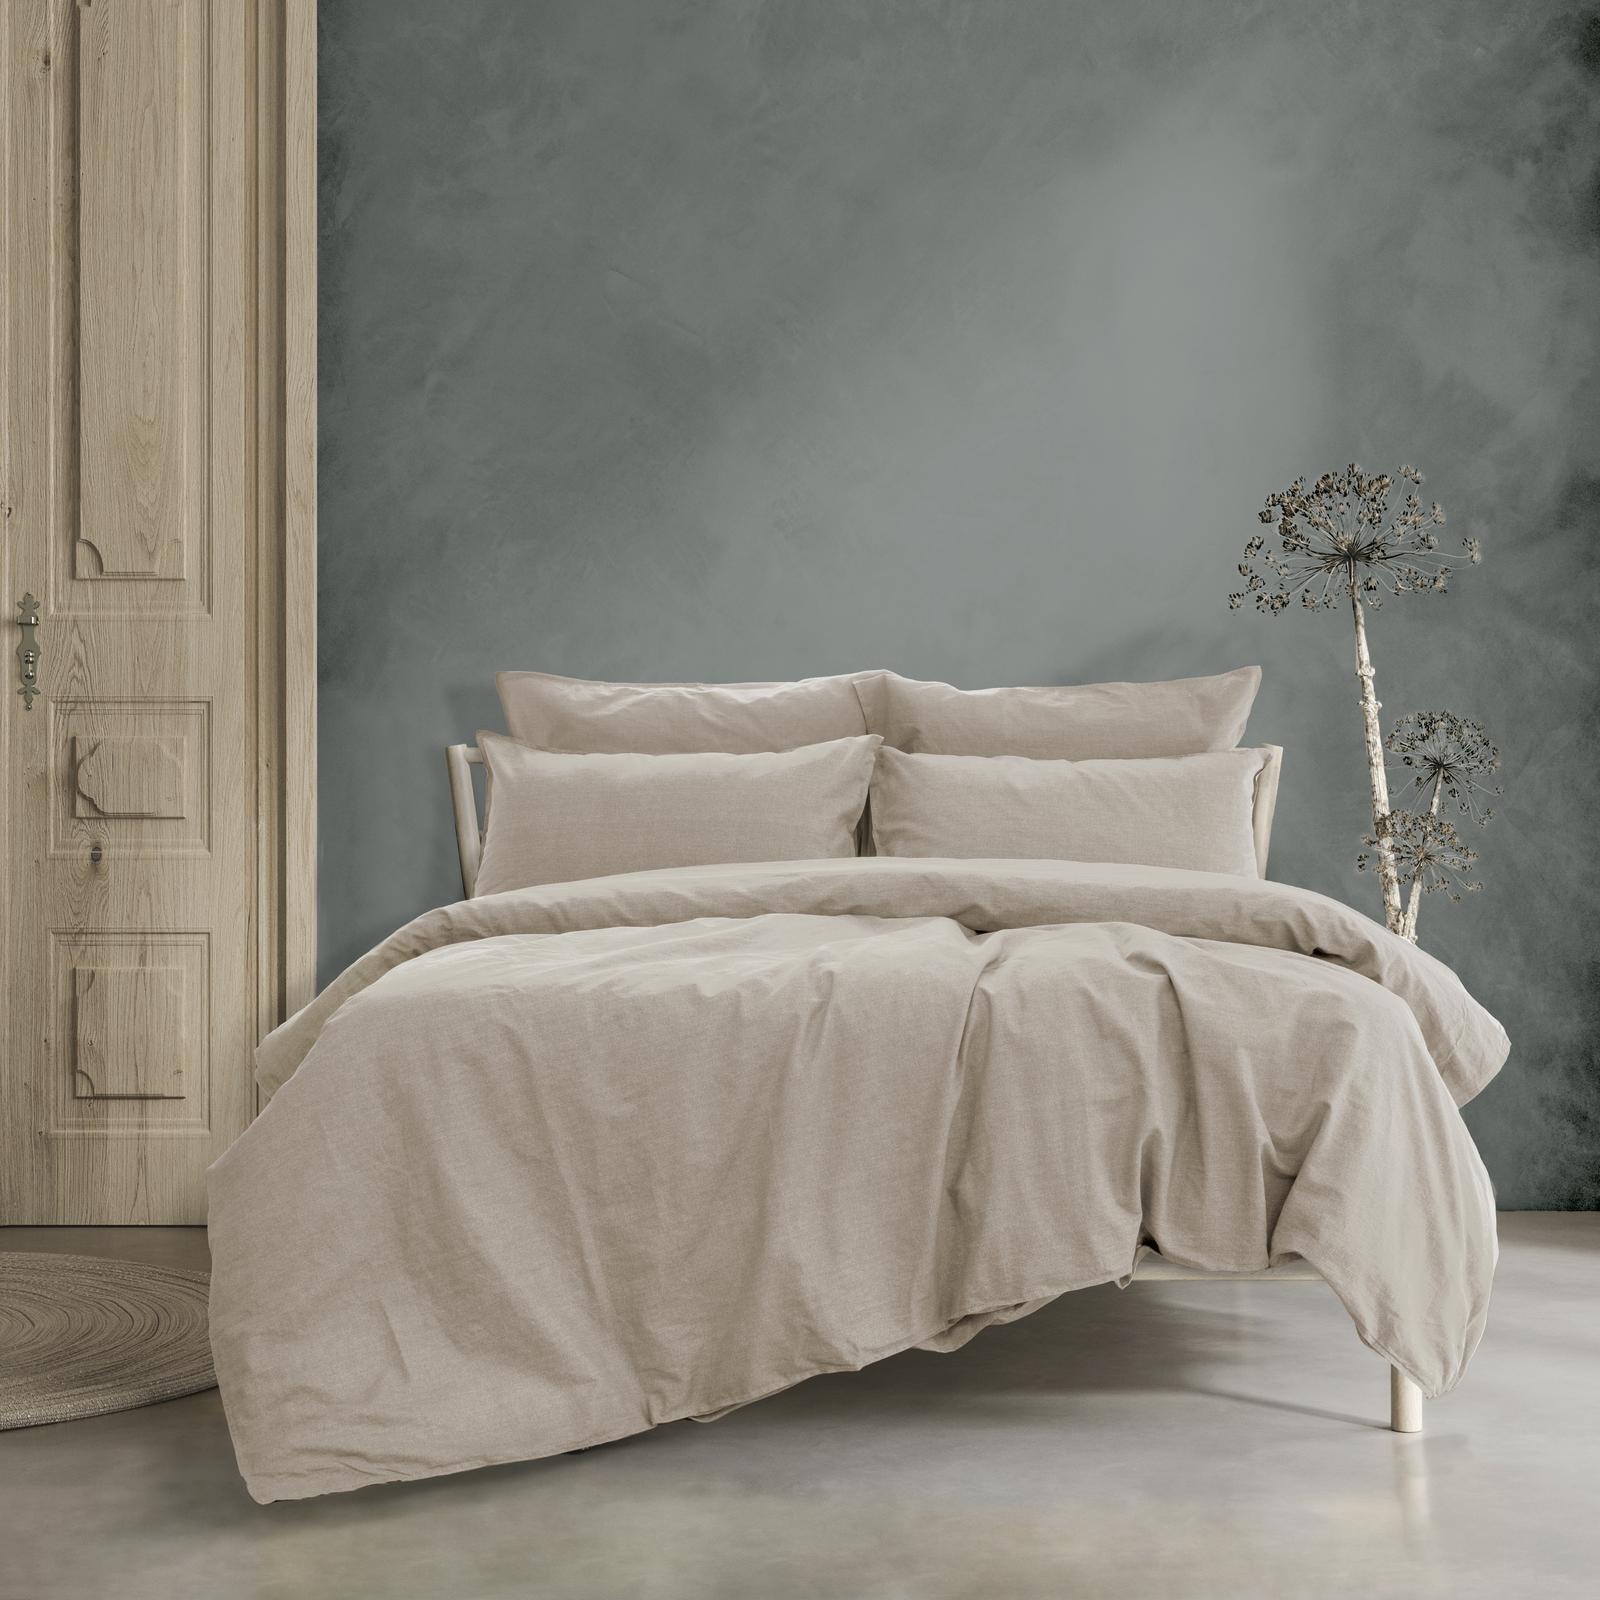 Ardor Boudoir Embre Queen Bed Cotton Quilt Cover Set Linen Look Washed Warm Grey